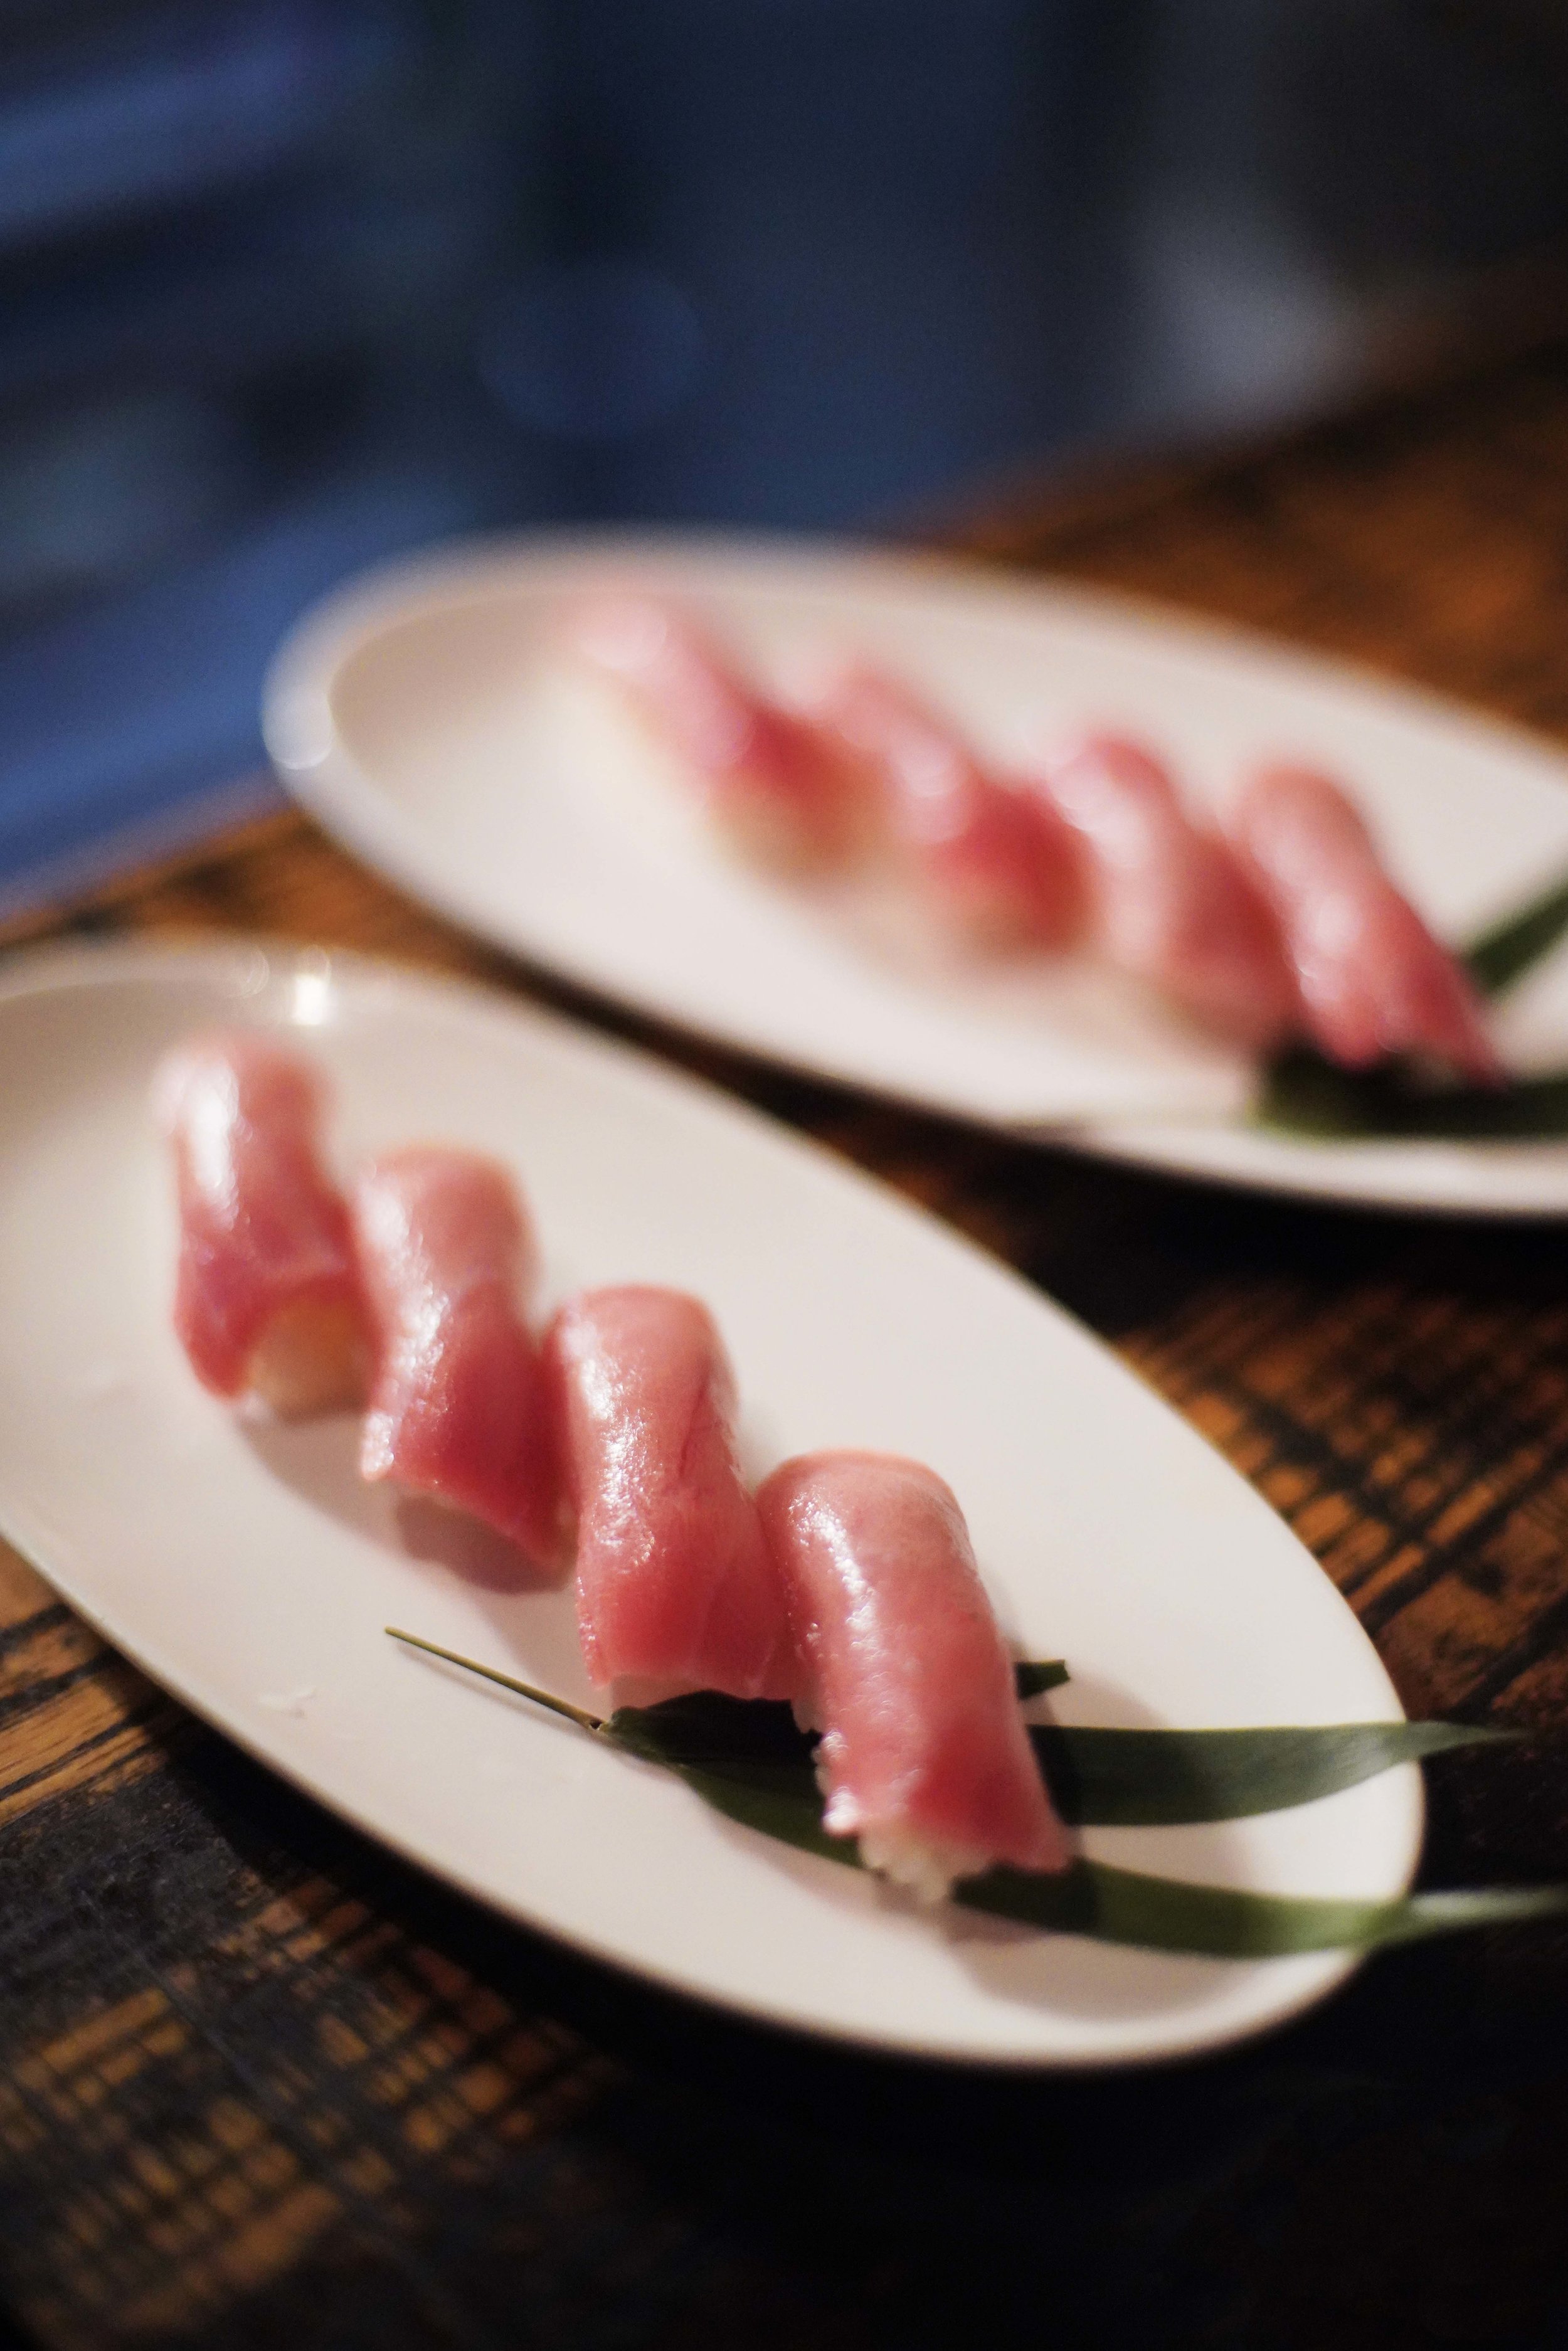 double-knot-sashimi-1900-small.jpg